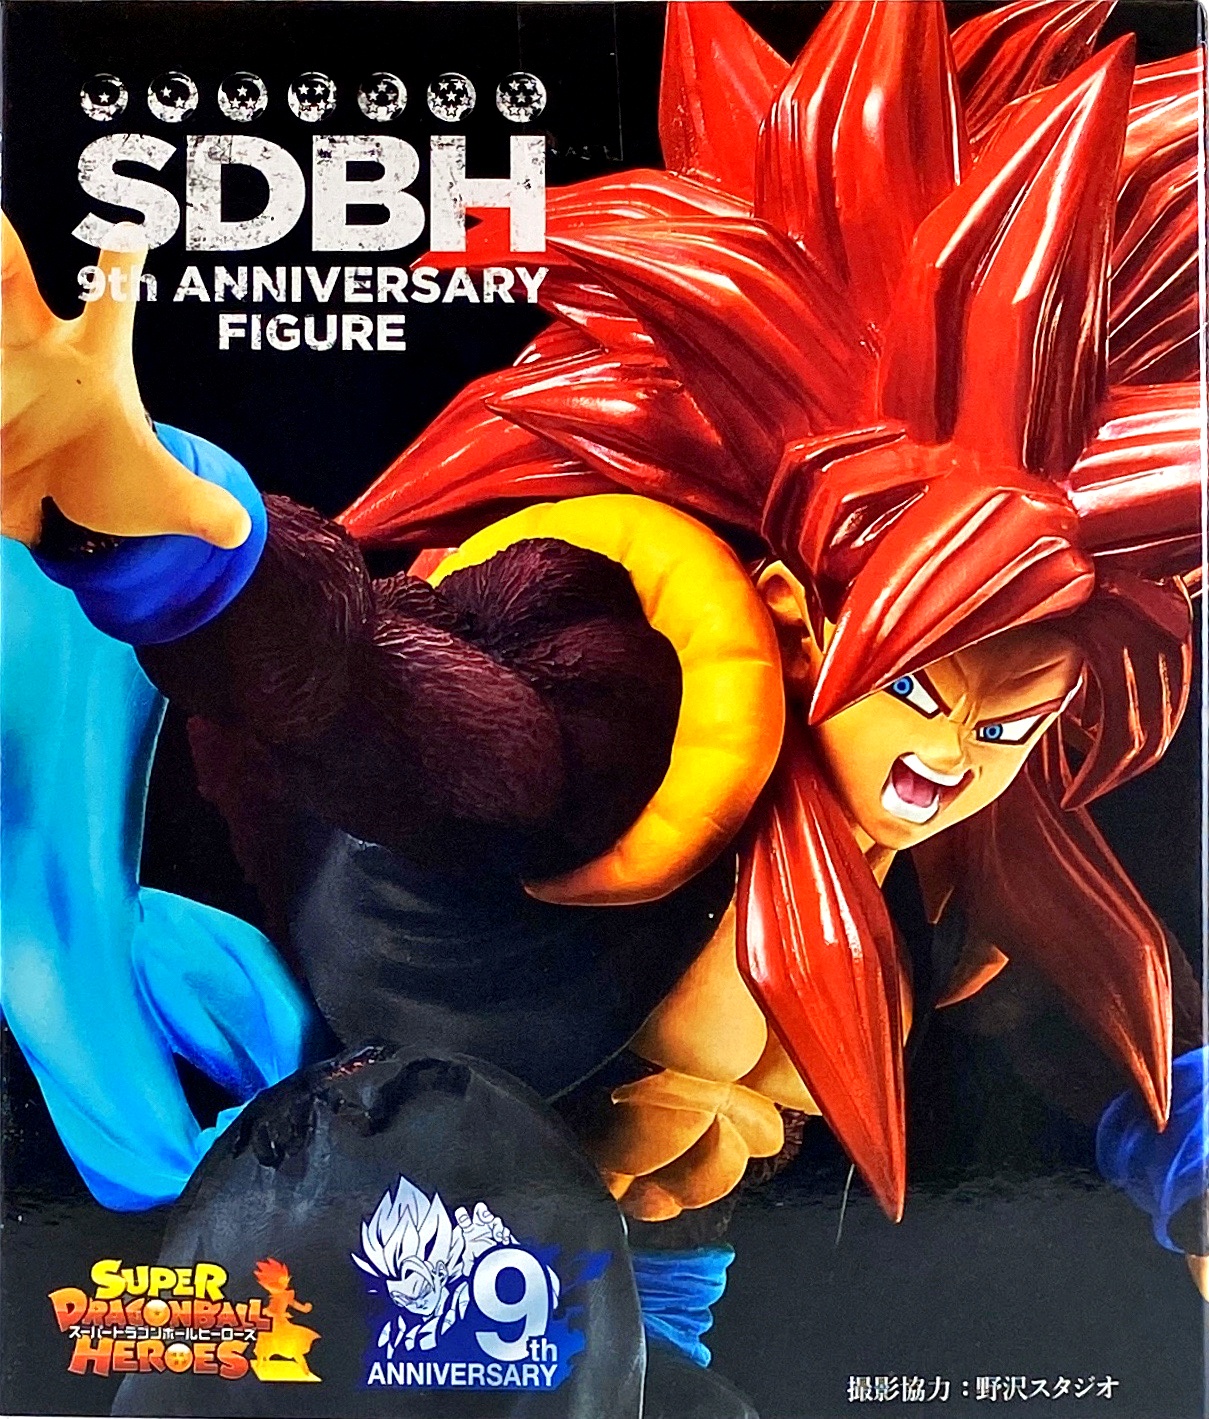 Super Dragon Ball Heroes 6 Inch Static Figure 9th Anniversary - Super